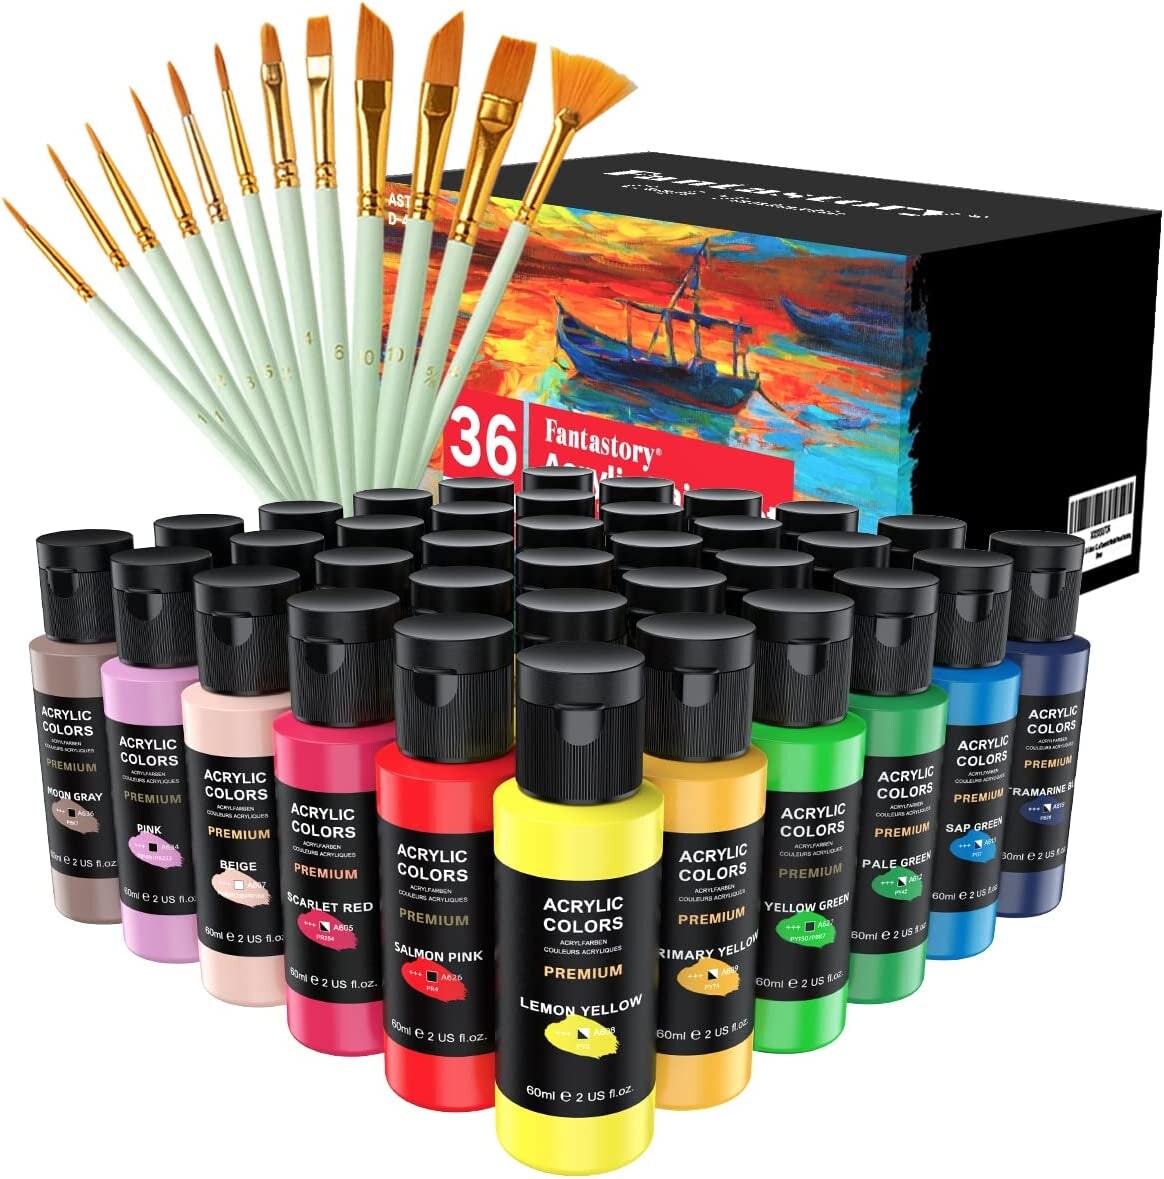 Kids Painting Set - Acrylic Paint Set for Kids - Art Supplies Kit